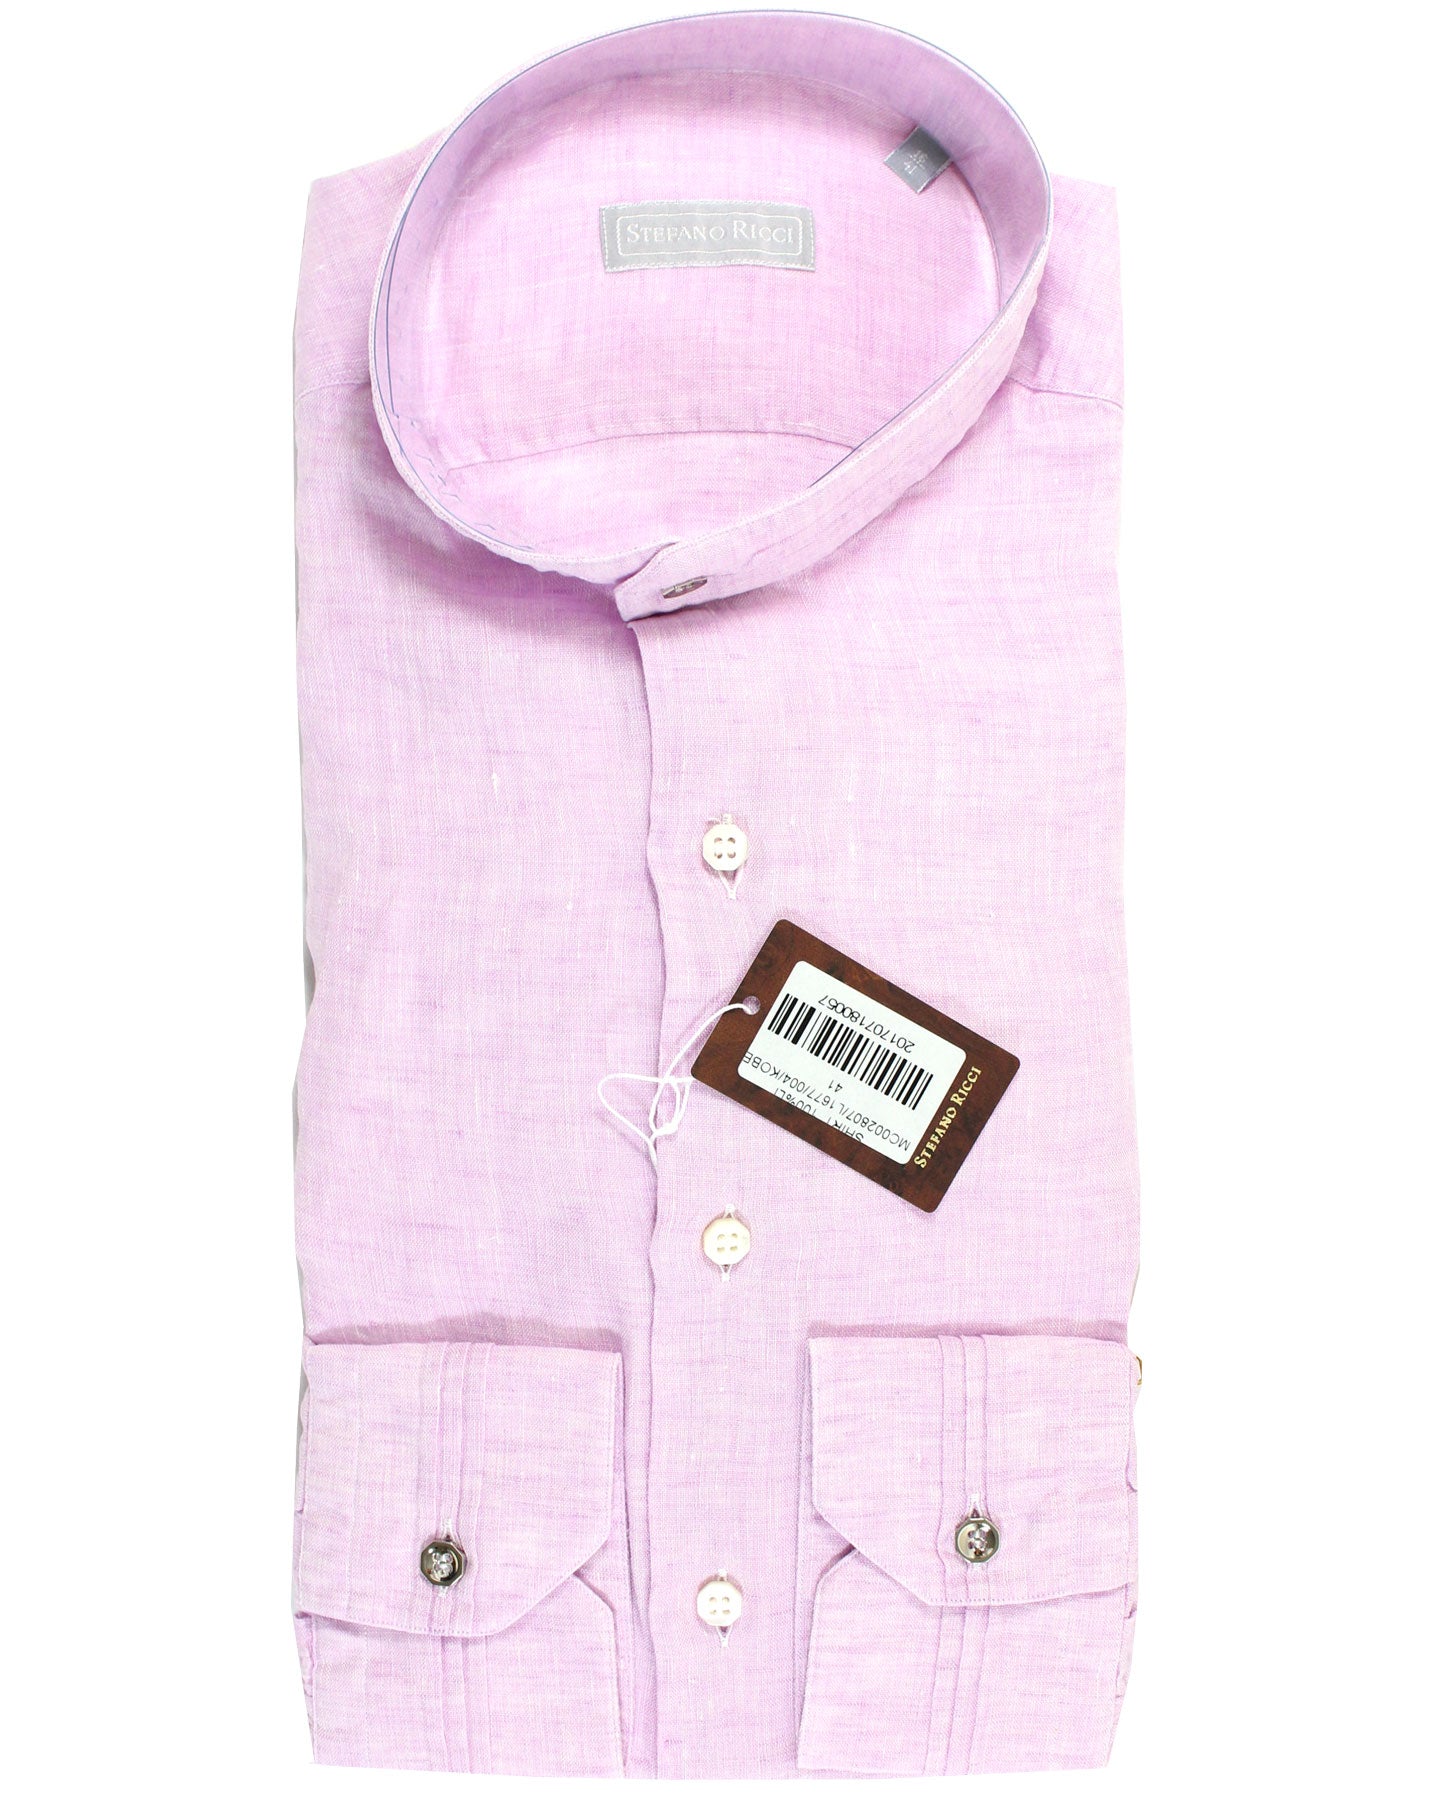 Stefano Ricci Shirt Pink Solid 42 - 16 1/2